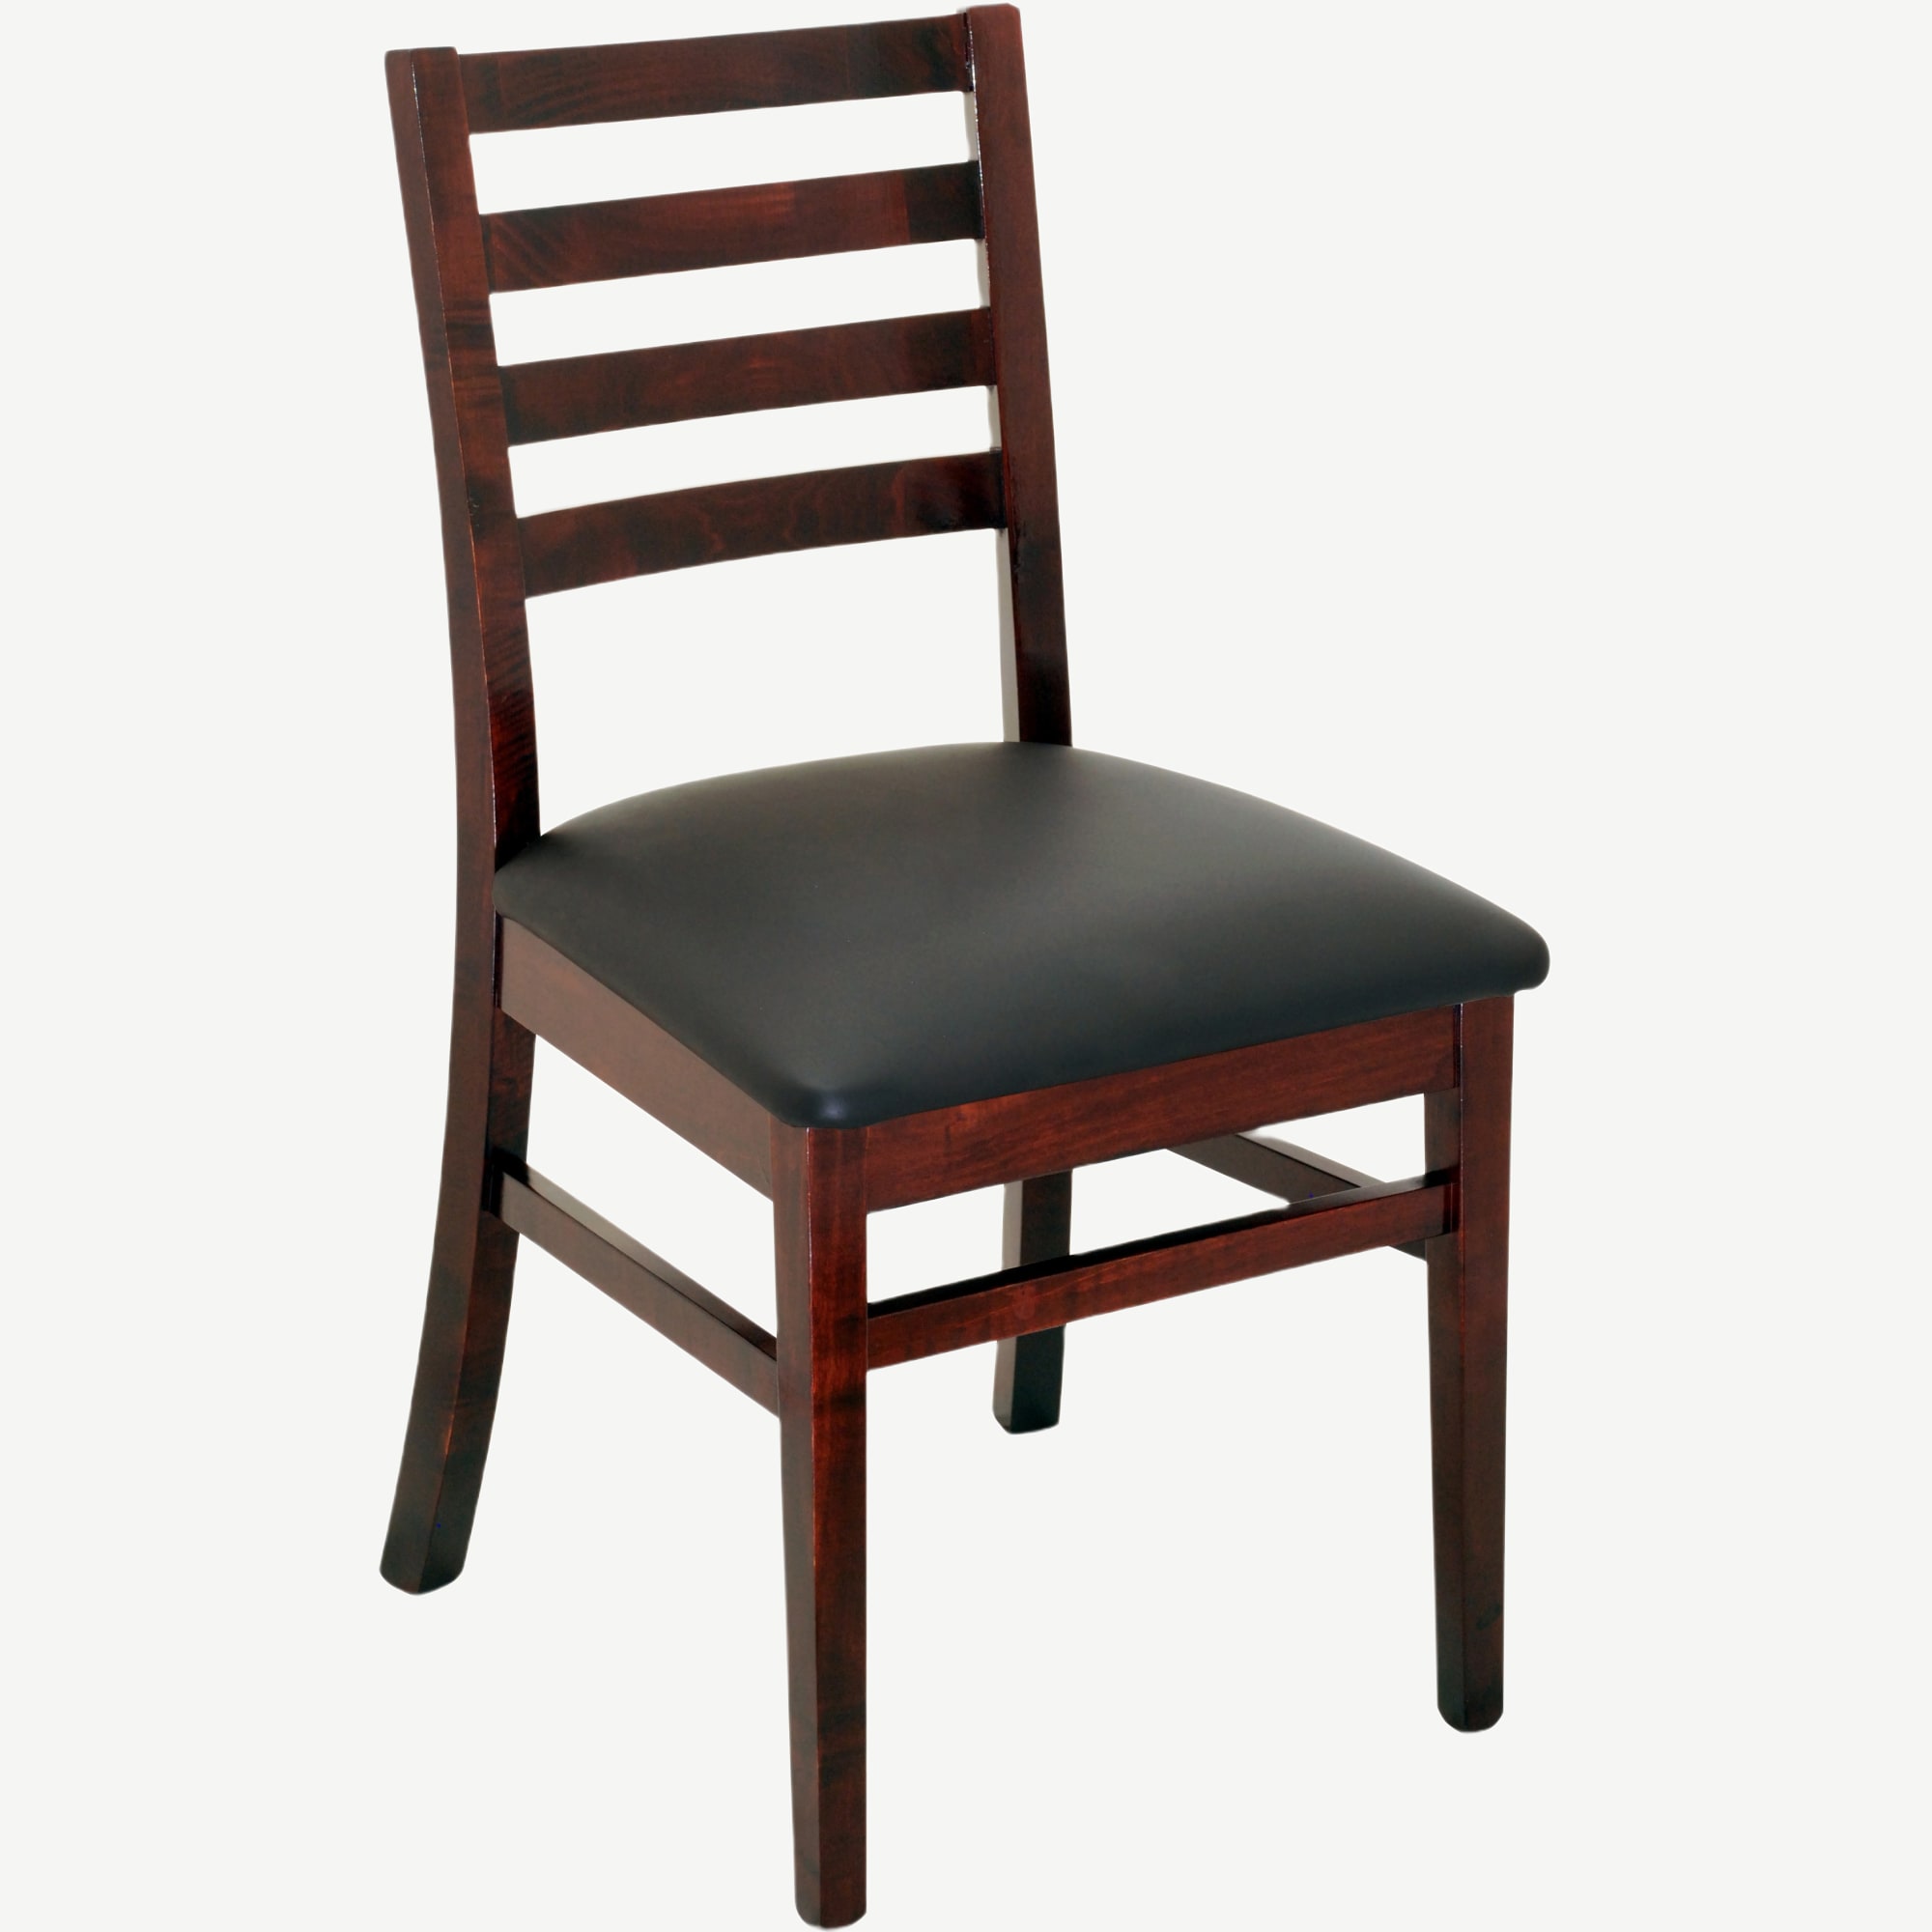 Designer Series Americano Ladder Back Chair